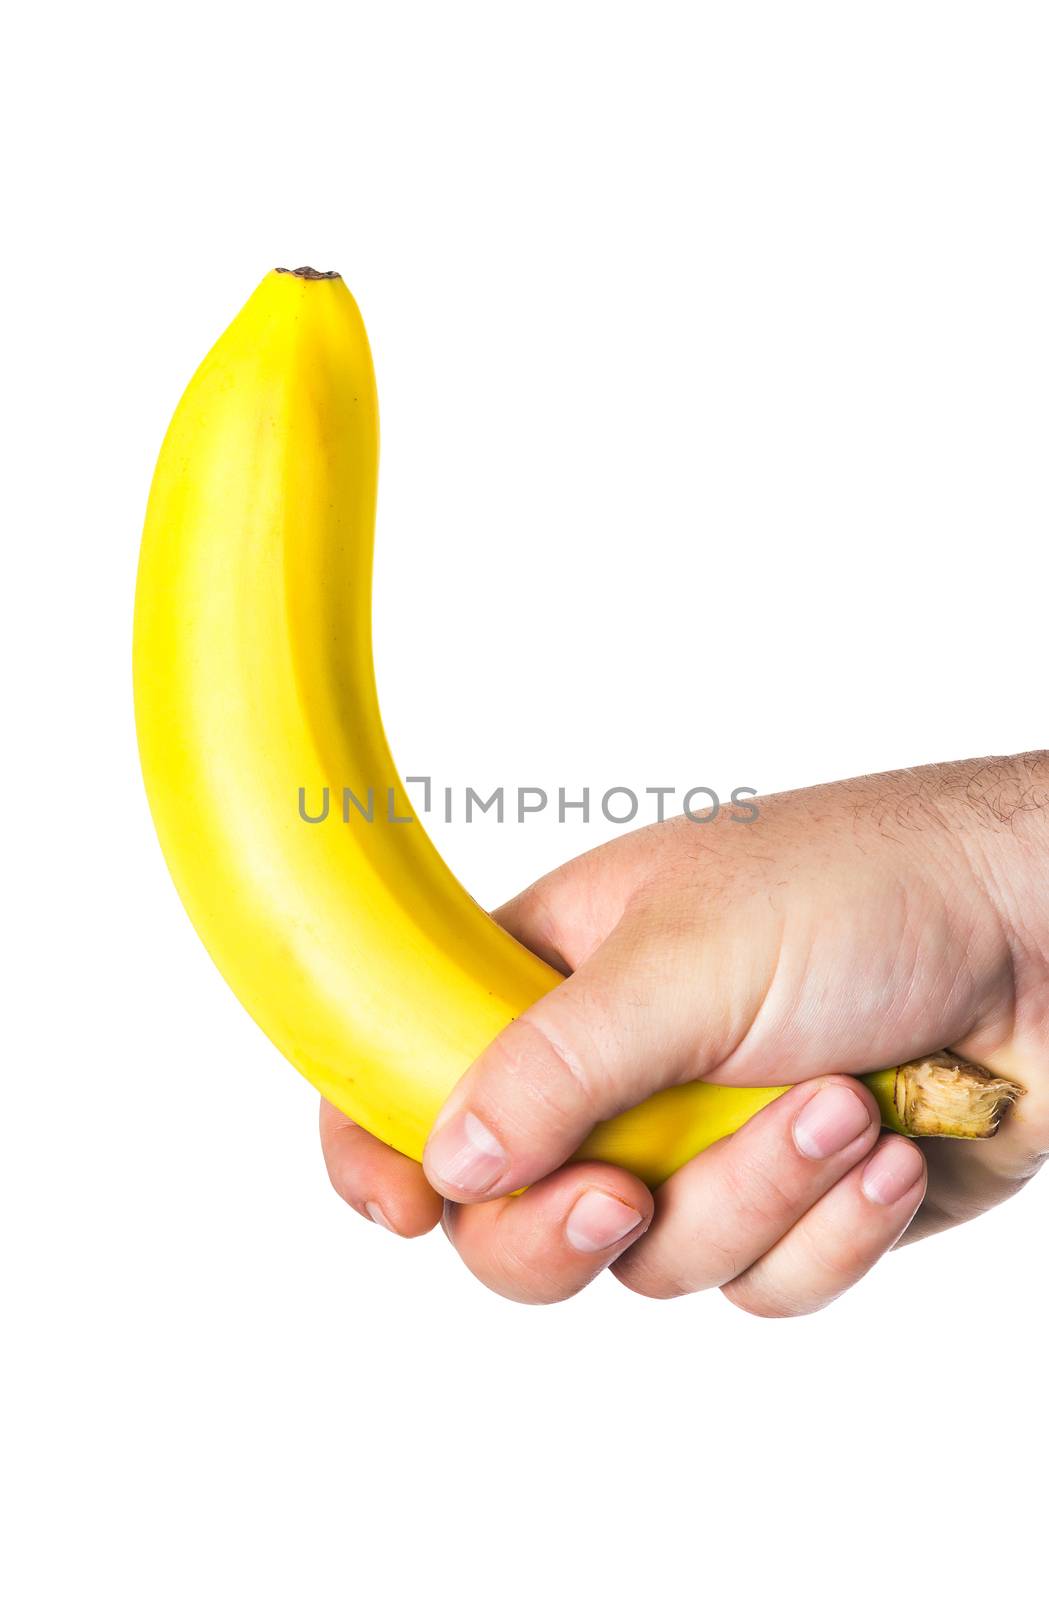 banana like a big penis by iprachenko